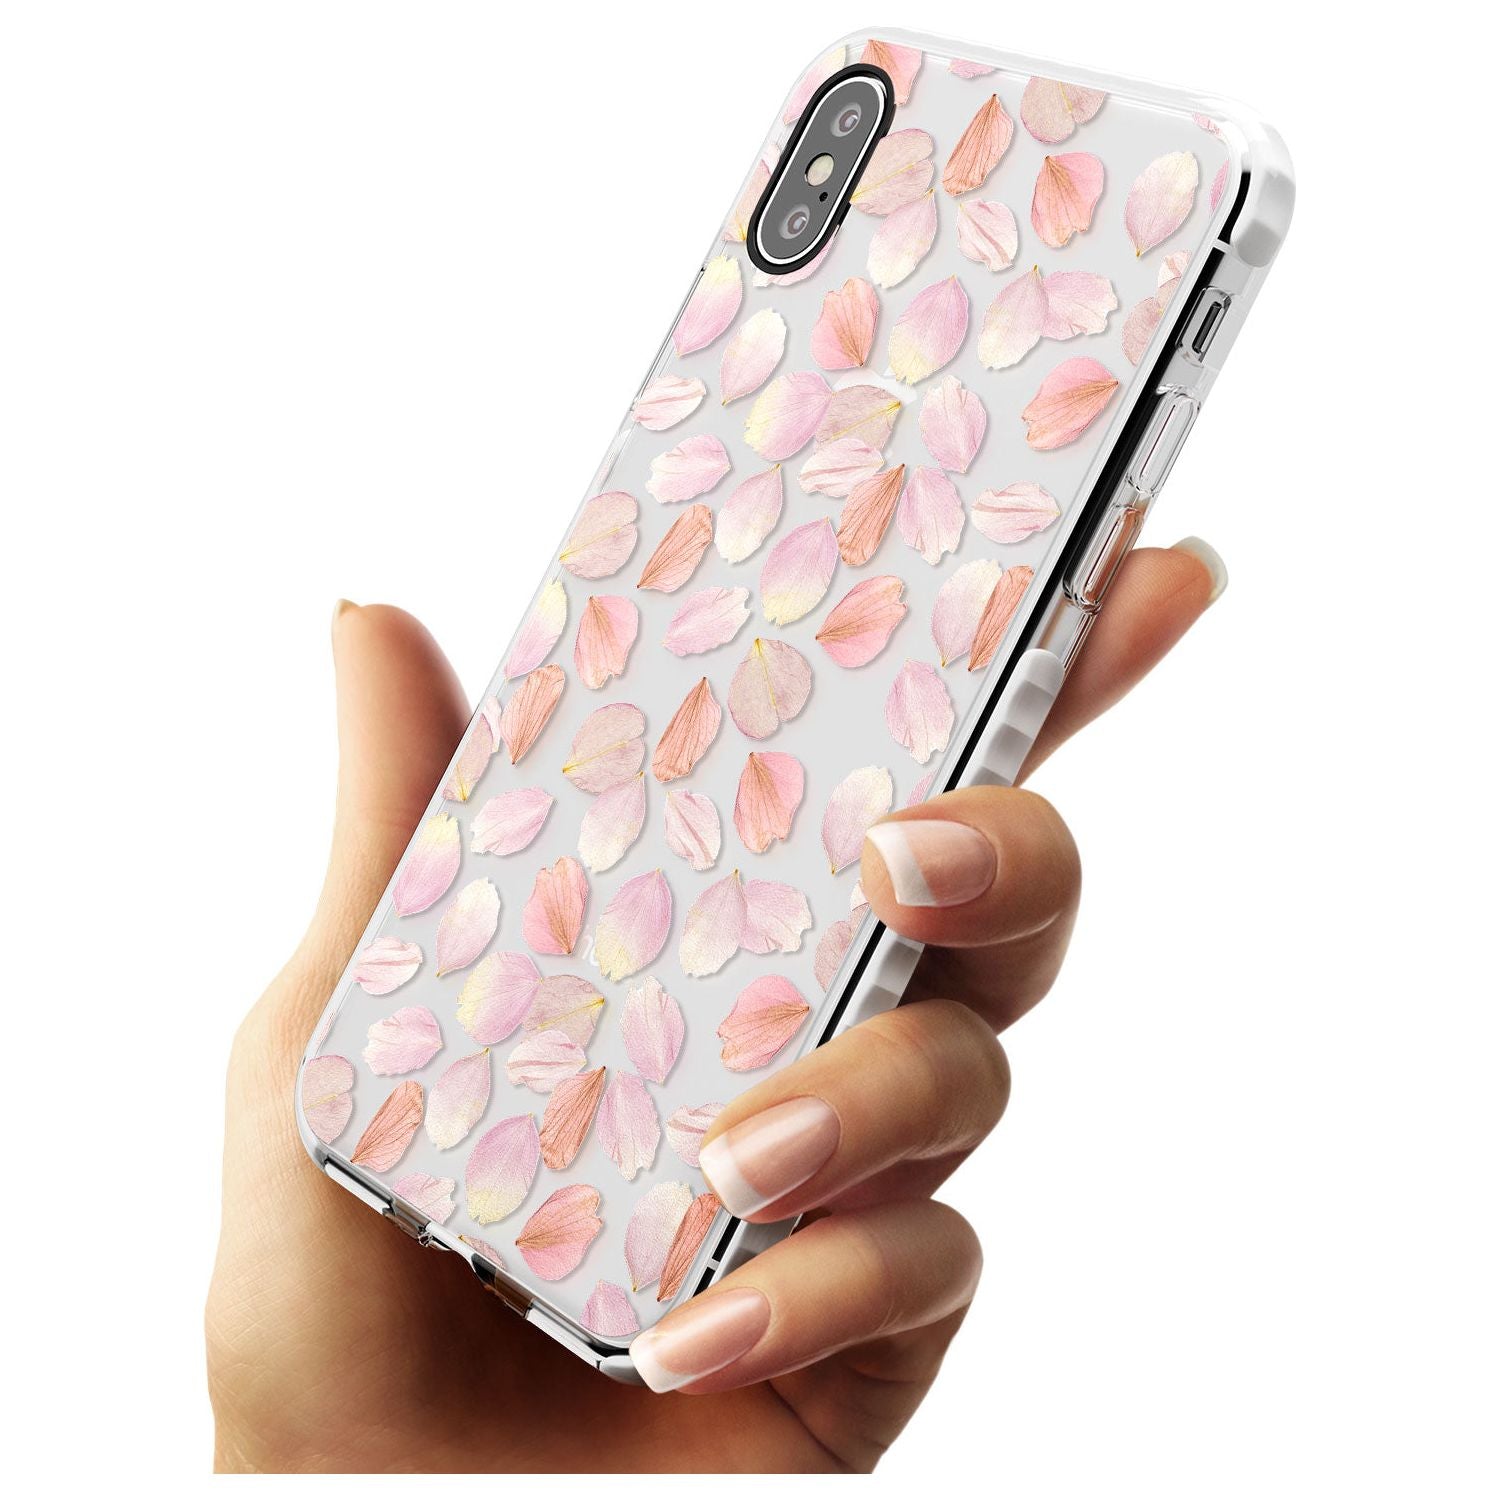 Pink Petals Transparent Design Impact Phone Case for iPhone X XS Max XR